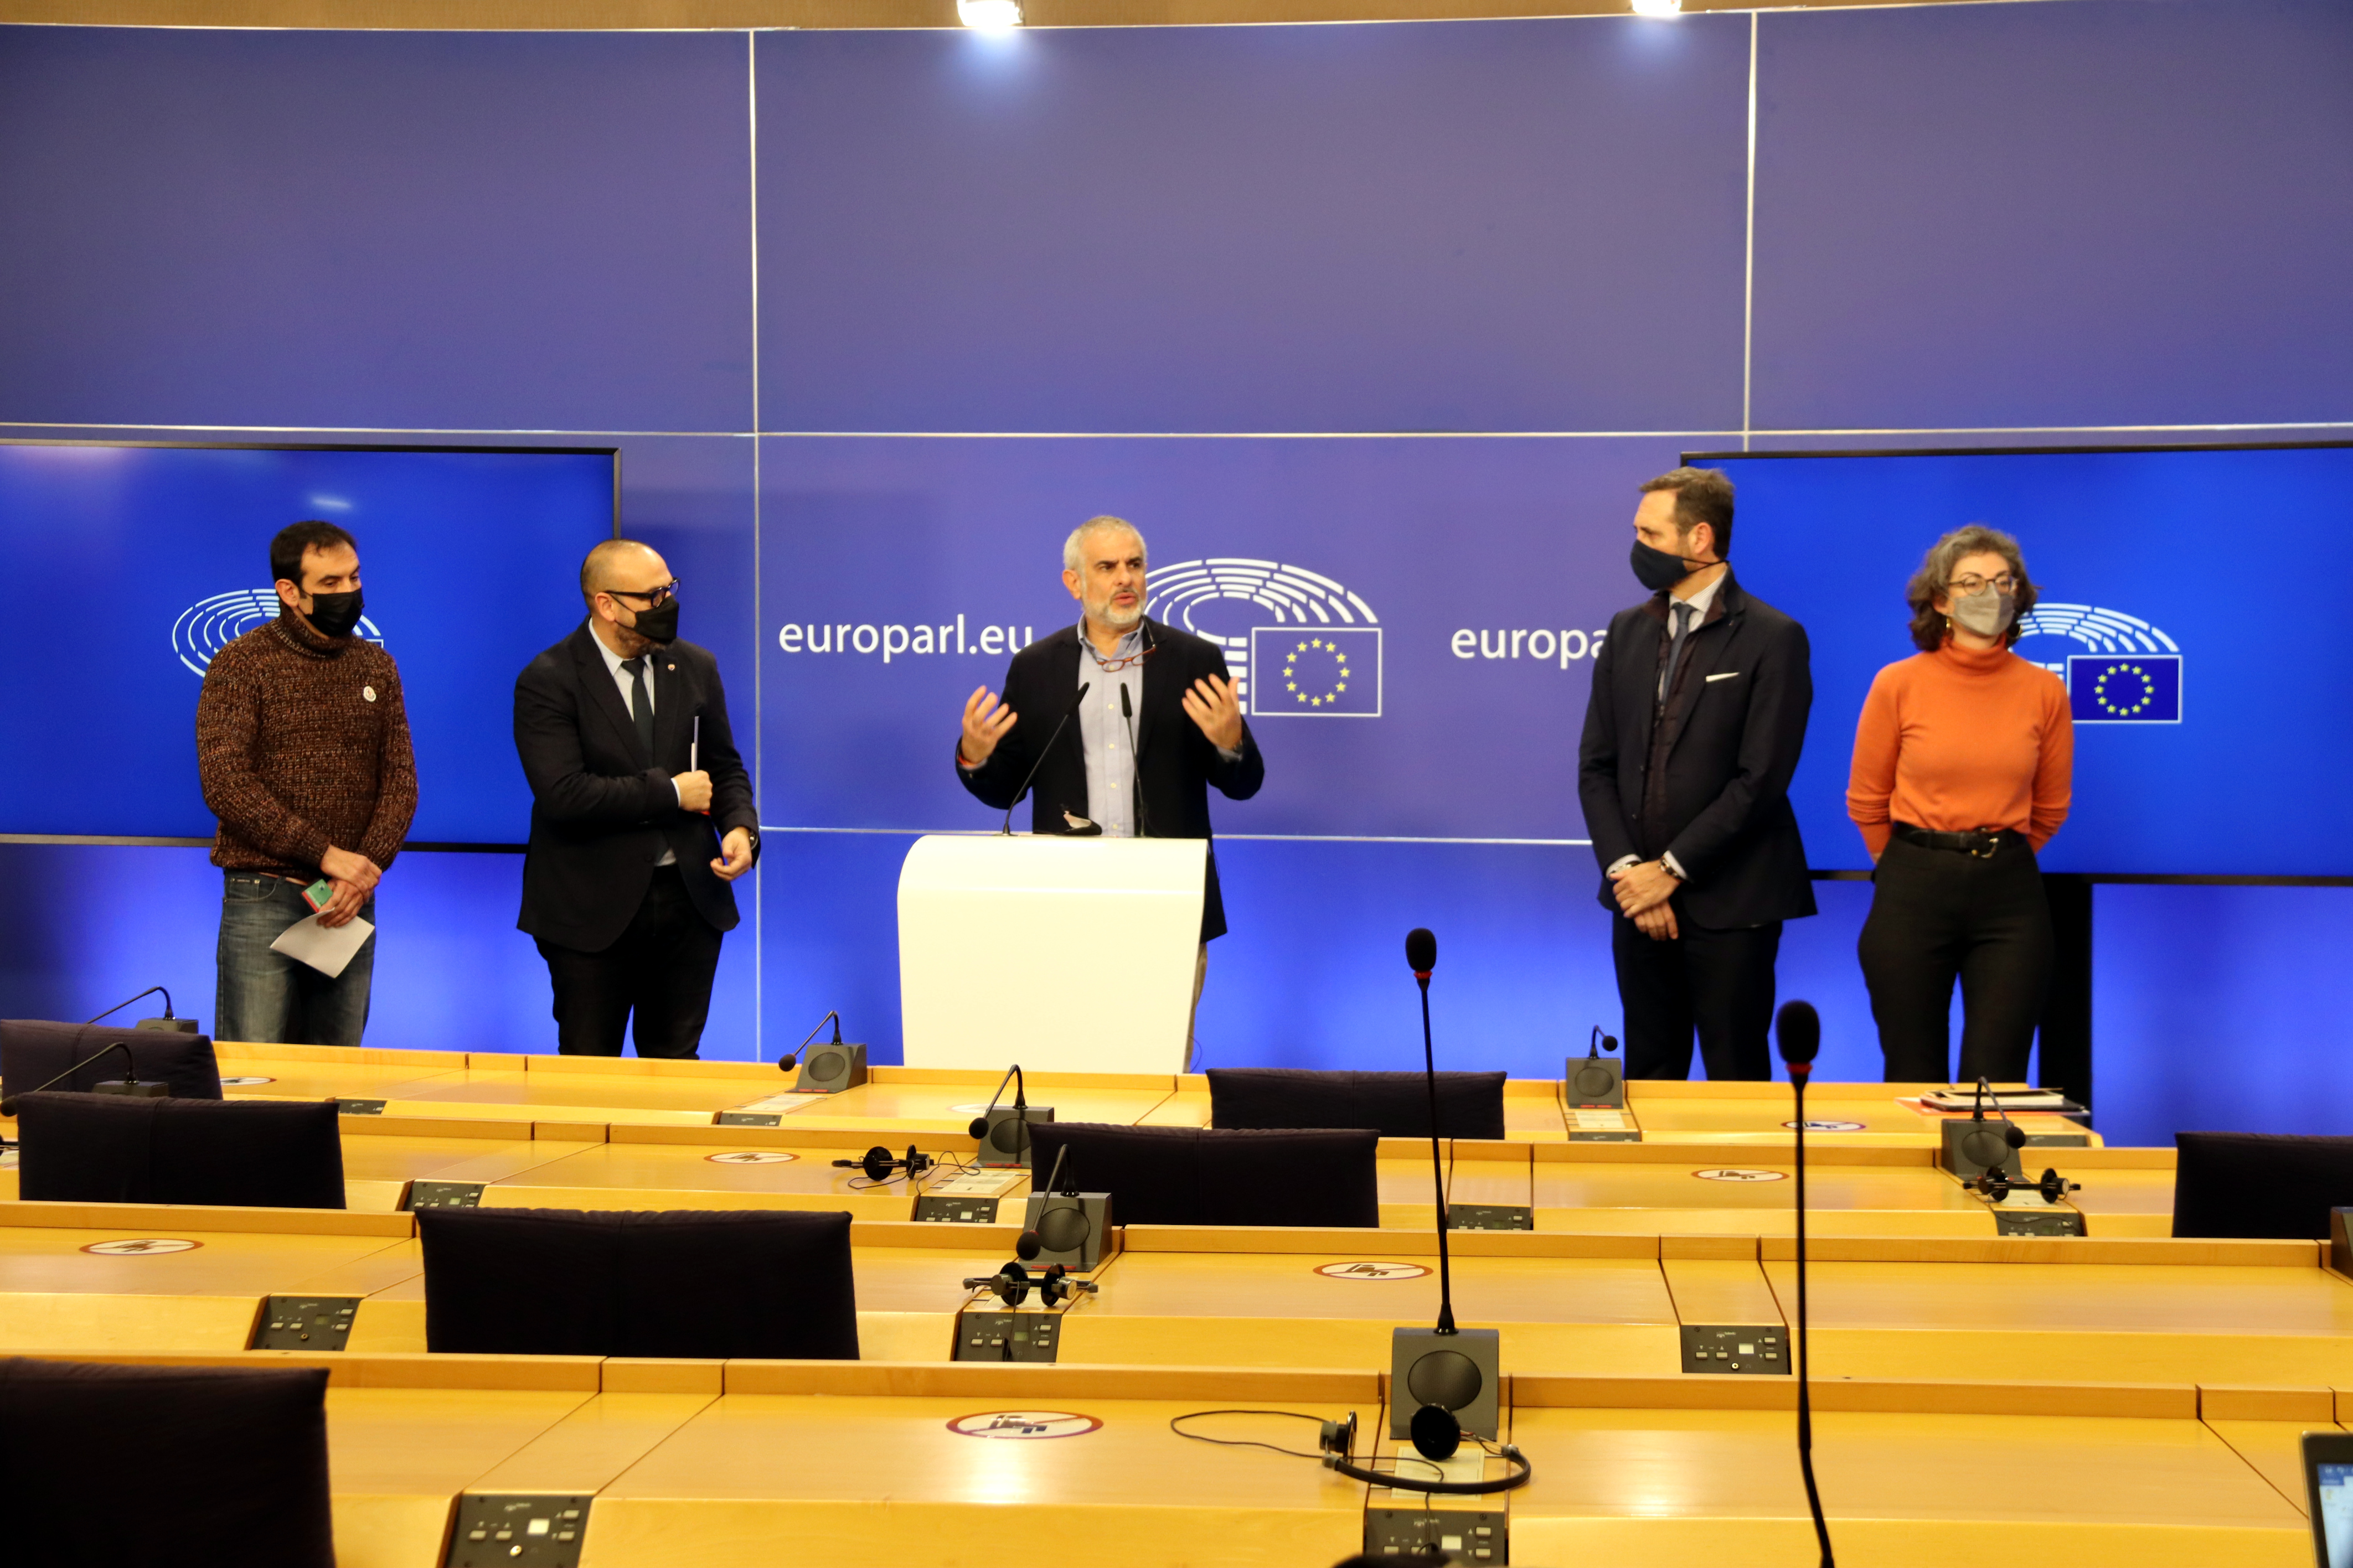 Ciudadanos press conference in the European Parliament, Brussels, January 25, 2022 (by Natàlia Segura)